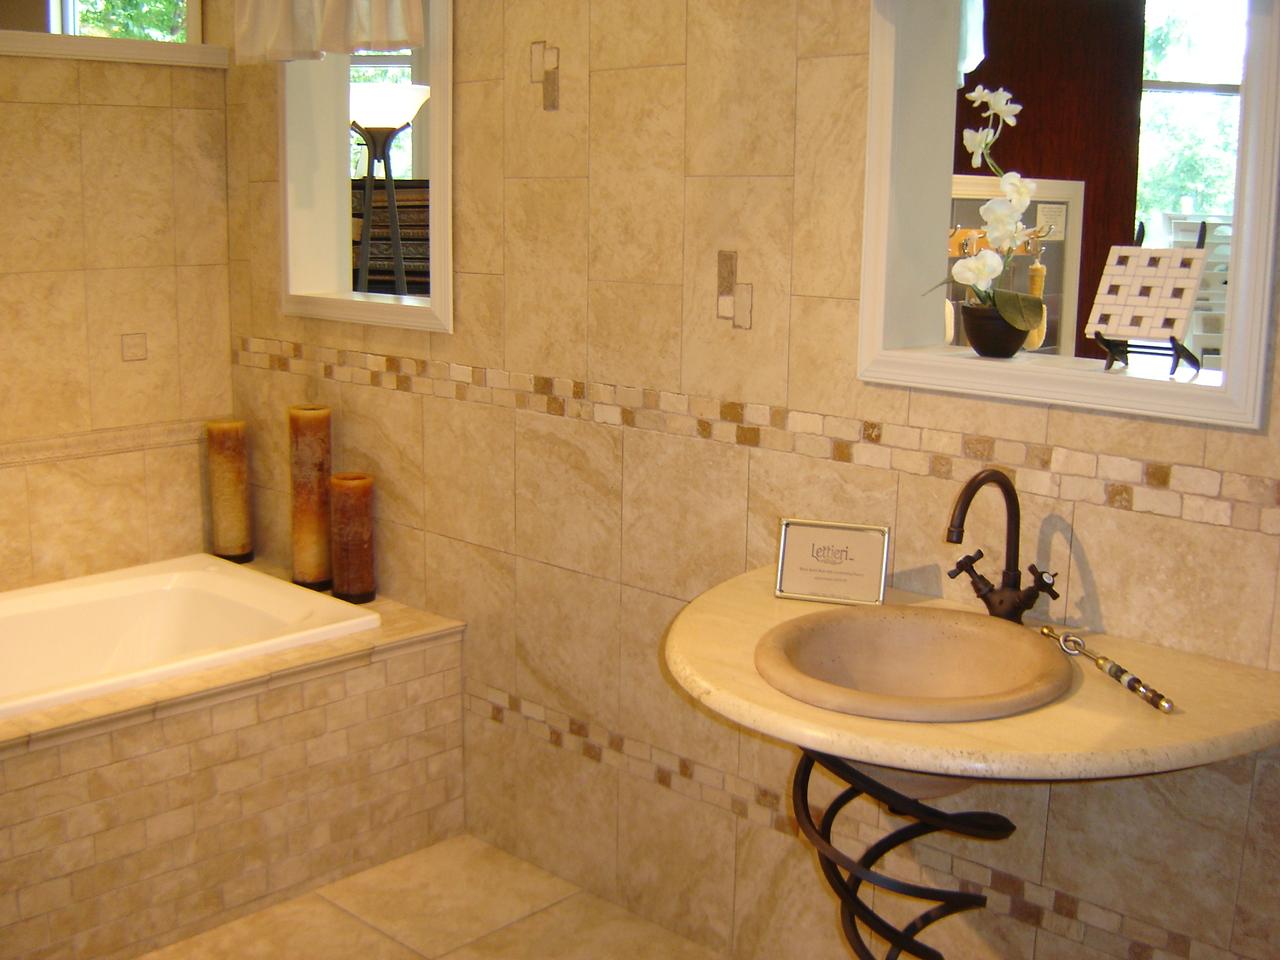 Bathroom tile design ideas images